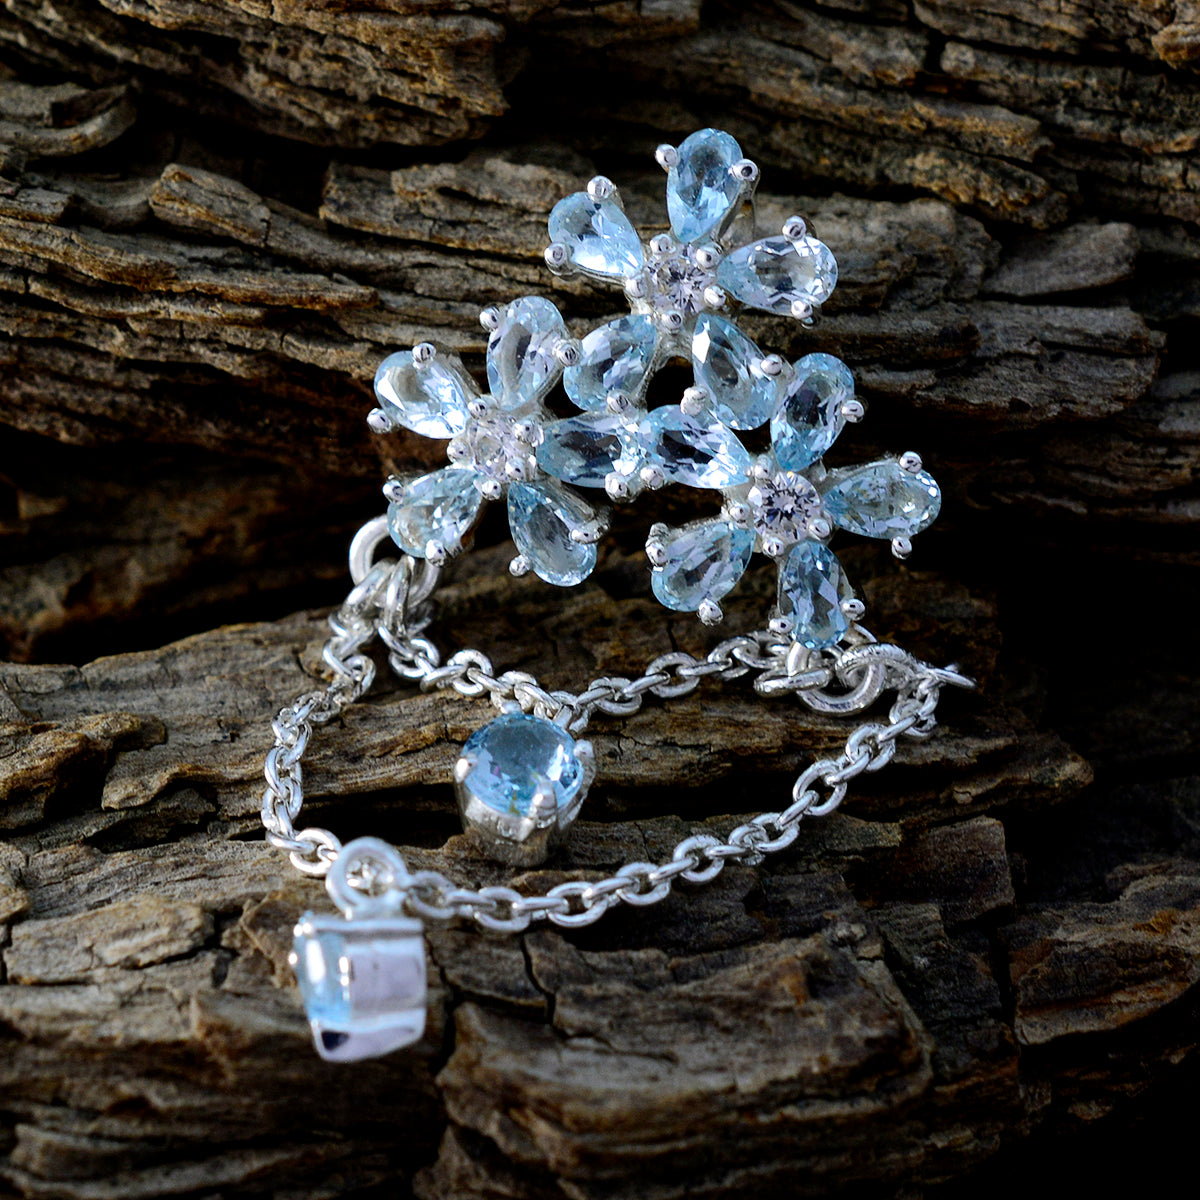 Riyo Good Gemstones Multi Shape Faceted Blue Blue Topaz Solid Silver Pendant gift for college